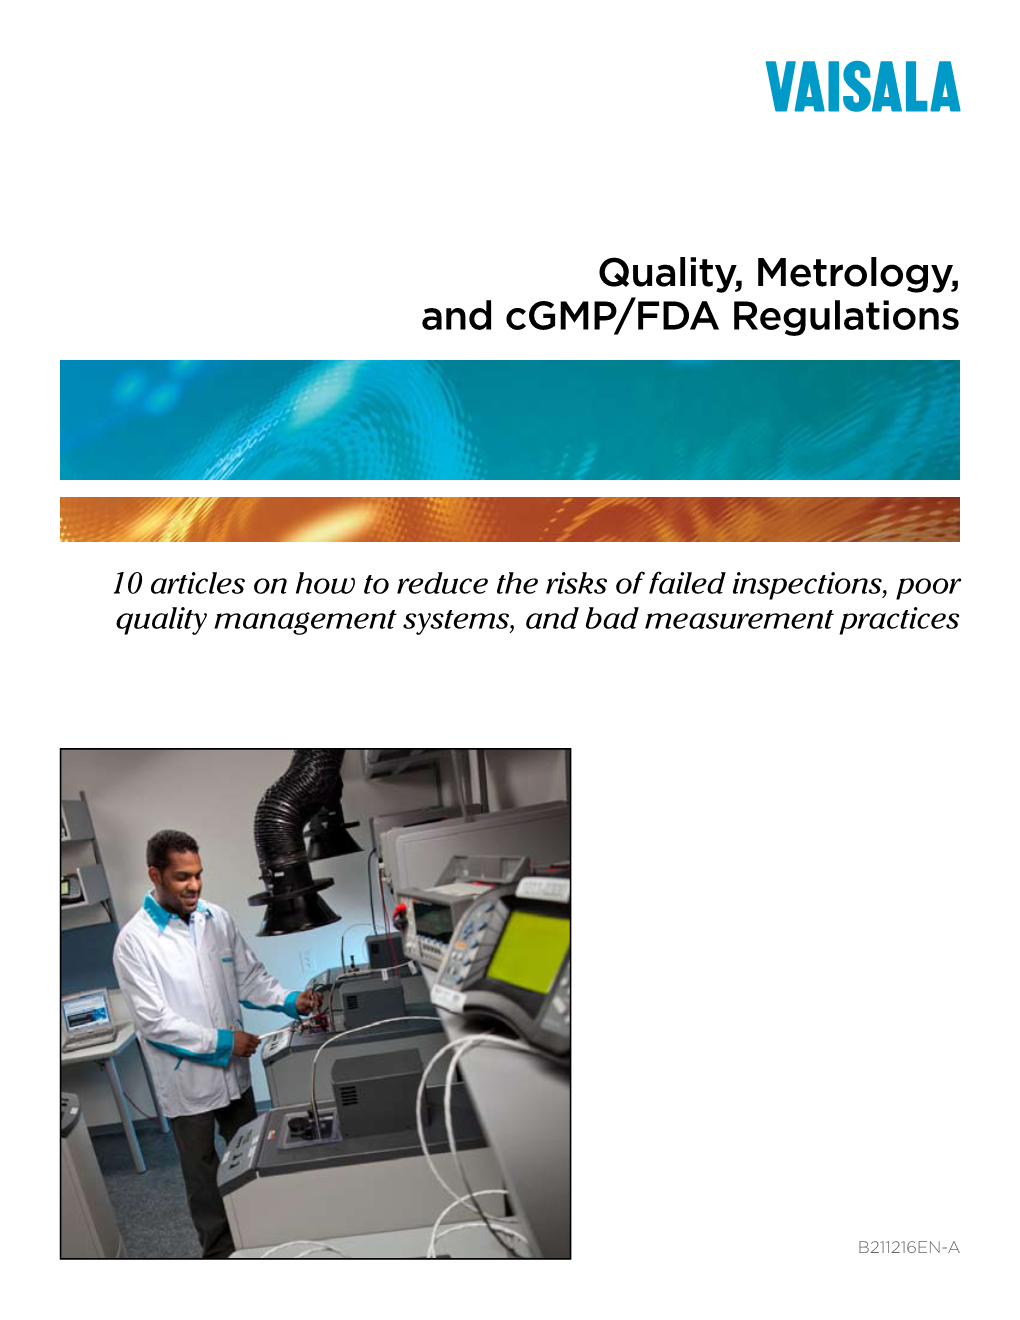 Quality, Metrology, and Cgmp/FDA Regulations